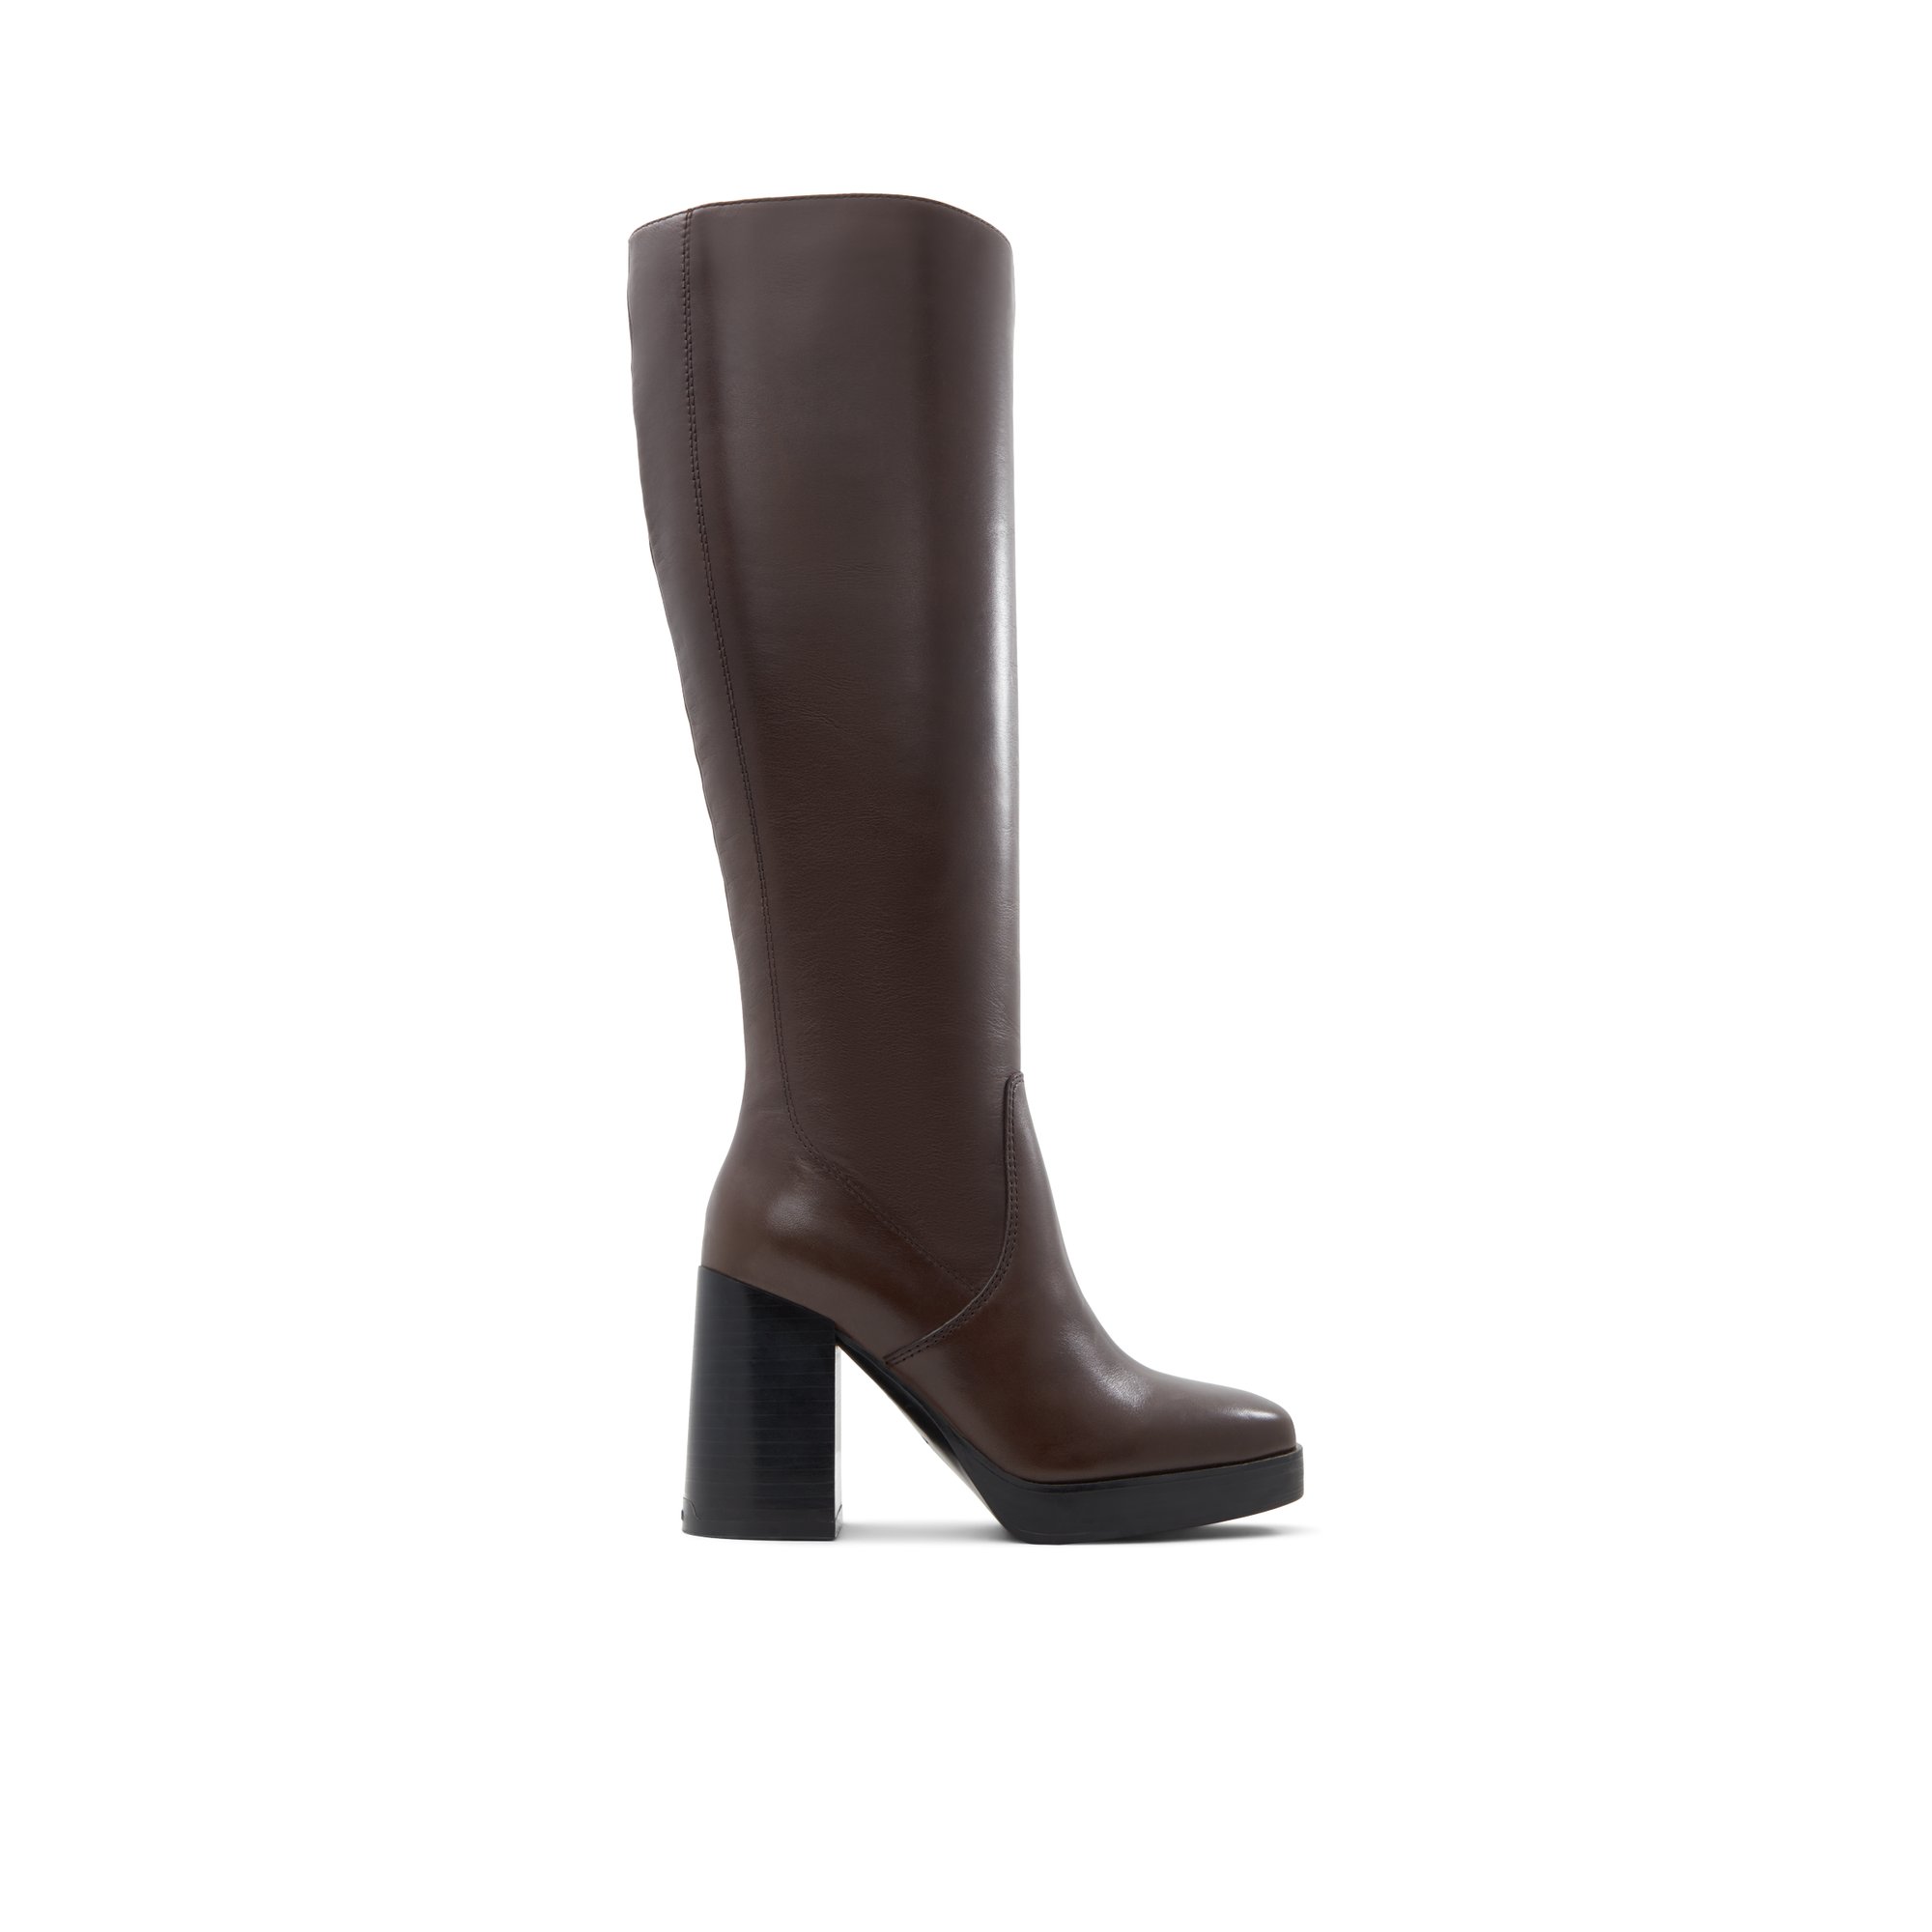 ALDO Equine - Women's Boots Tall - Brown